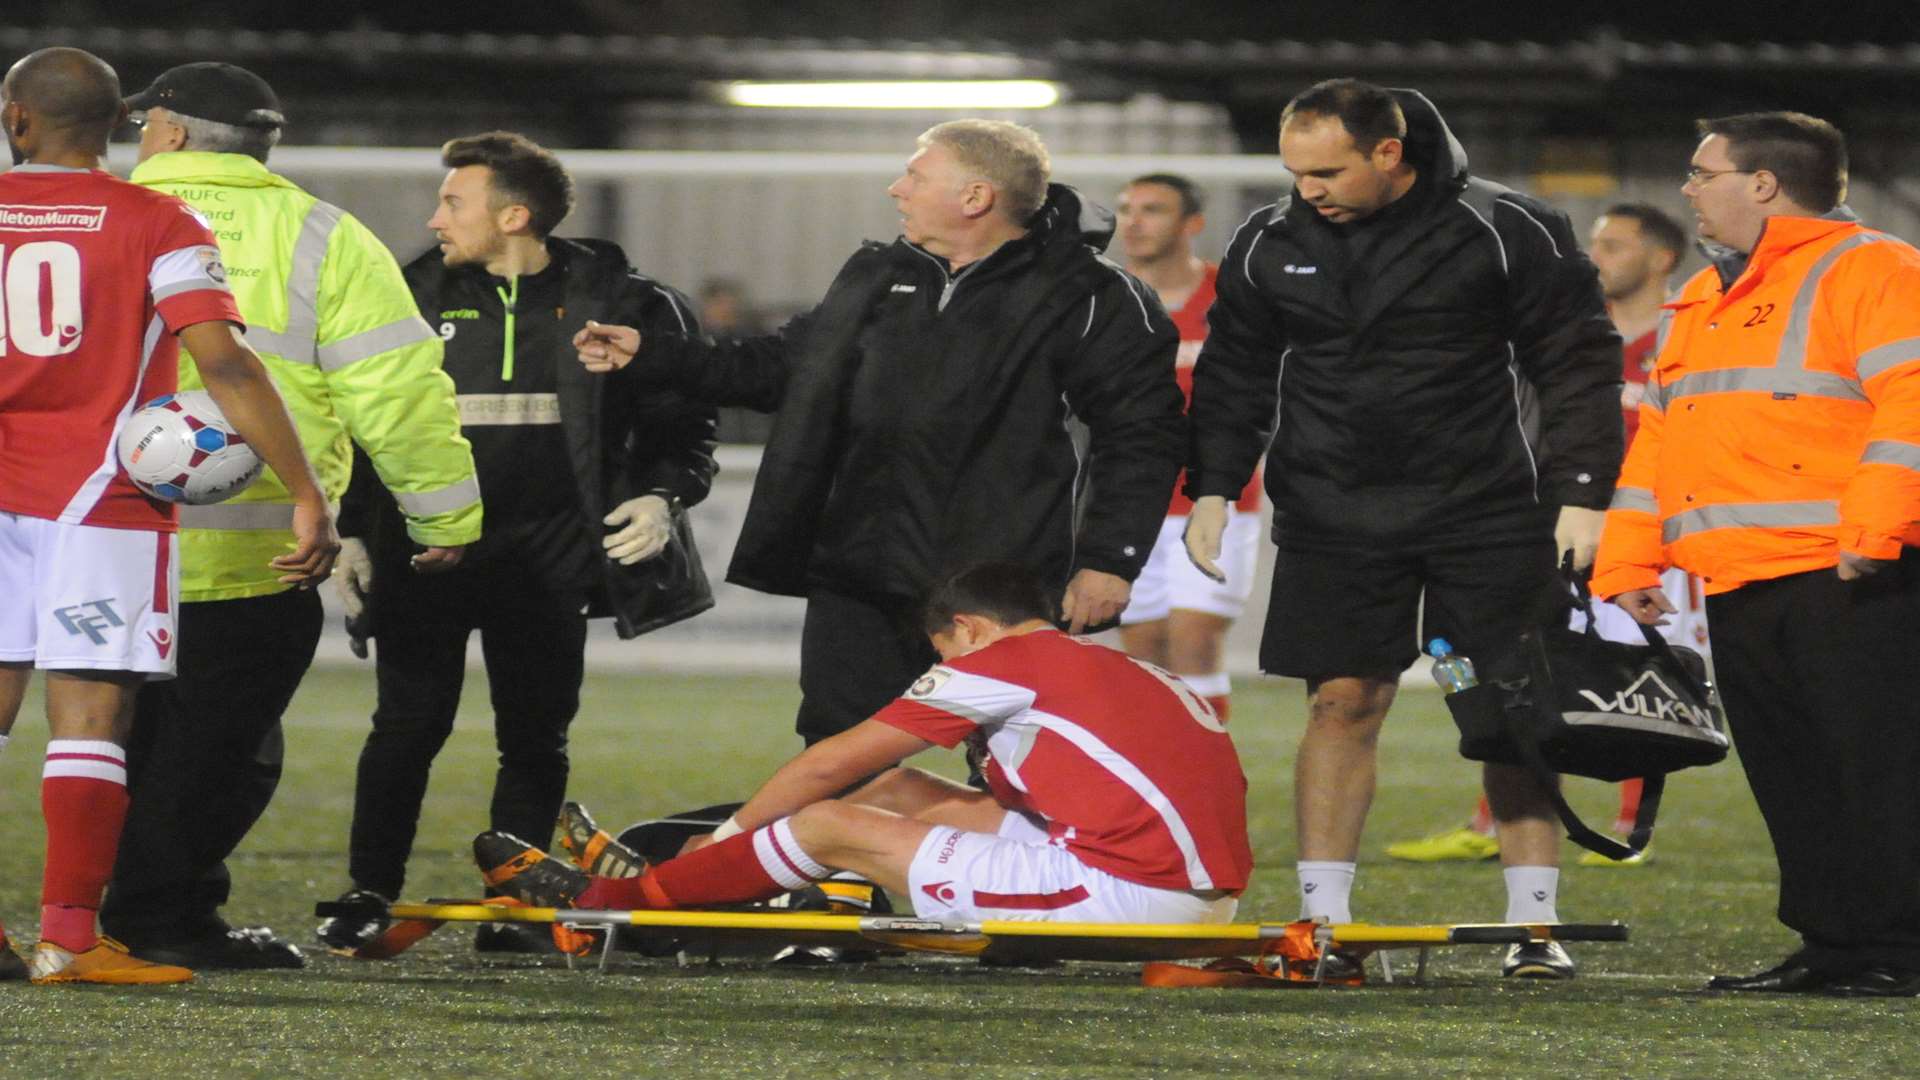 Lloyd Harrington ruptured ankle ligaments playing for Ebbsfleet against Maidstone Picture: Steve Crispe